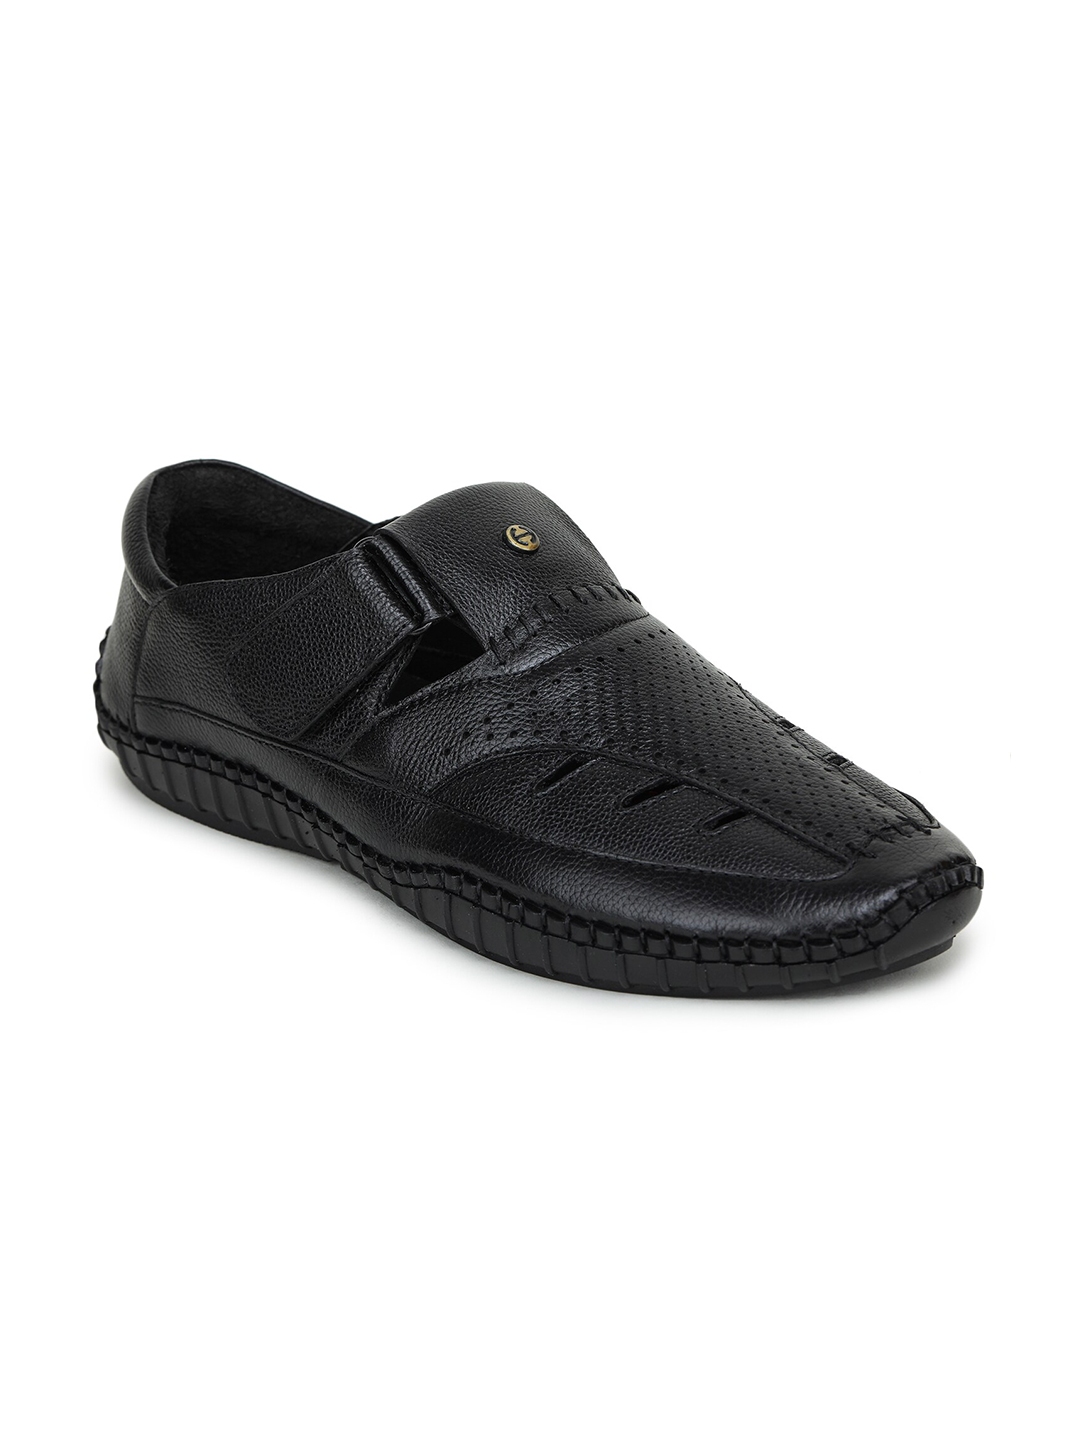 Buy Liberty Men Brown Leather Comfort Sandals - Sandals for Men ...